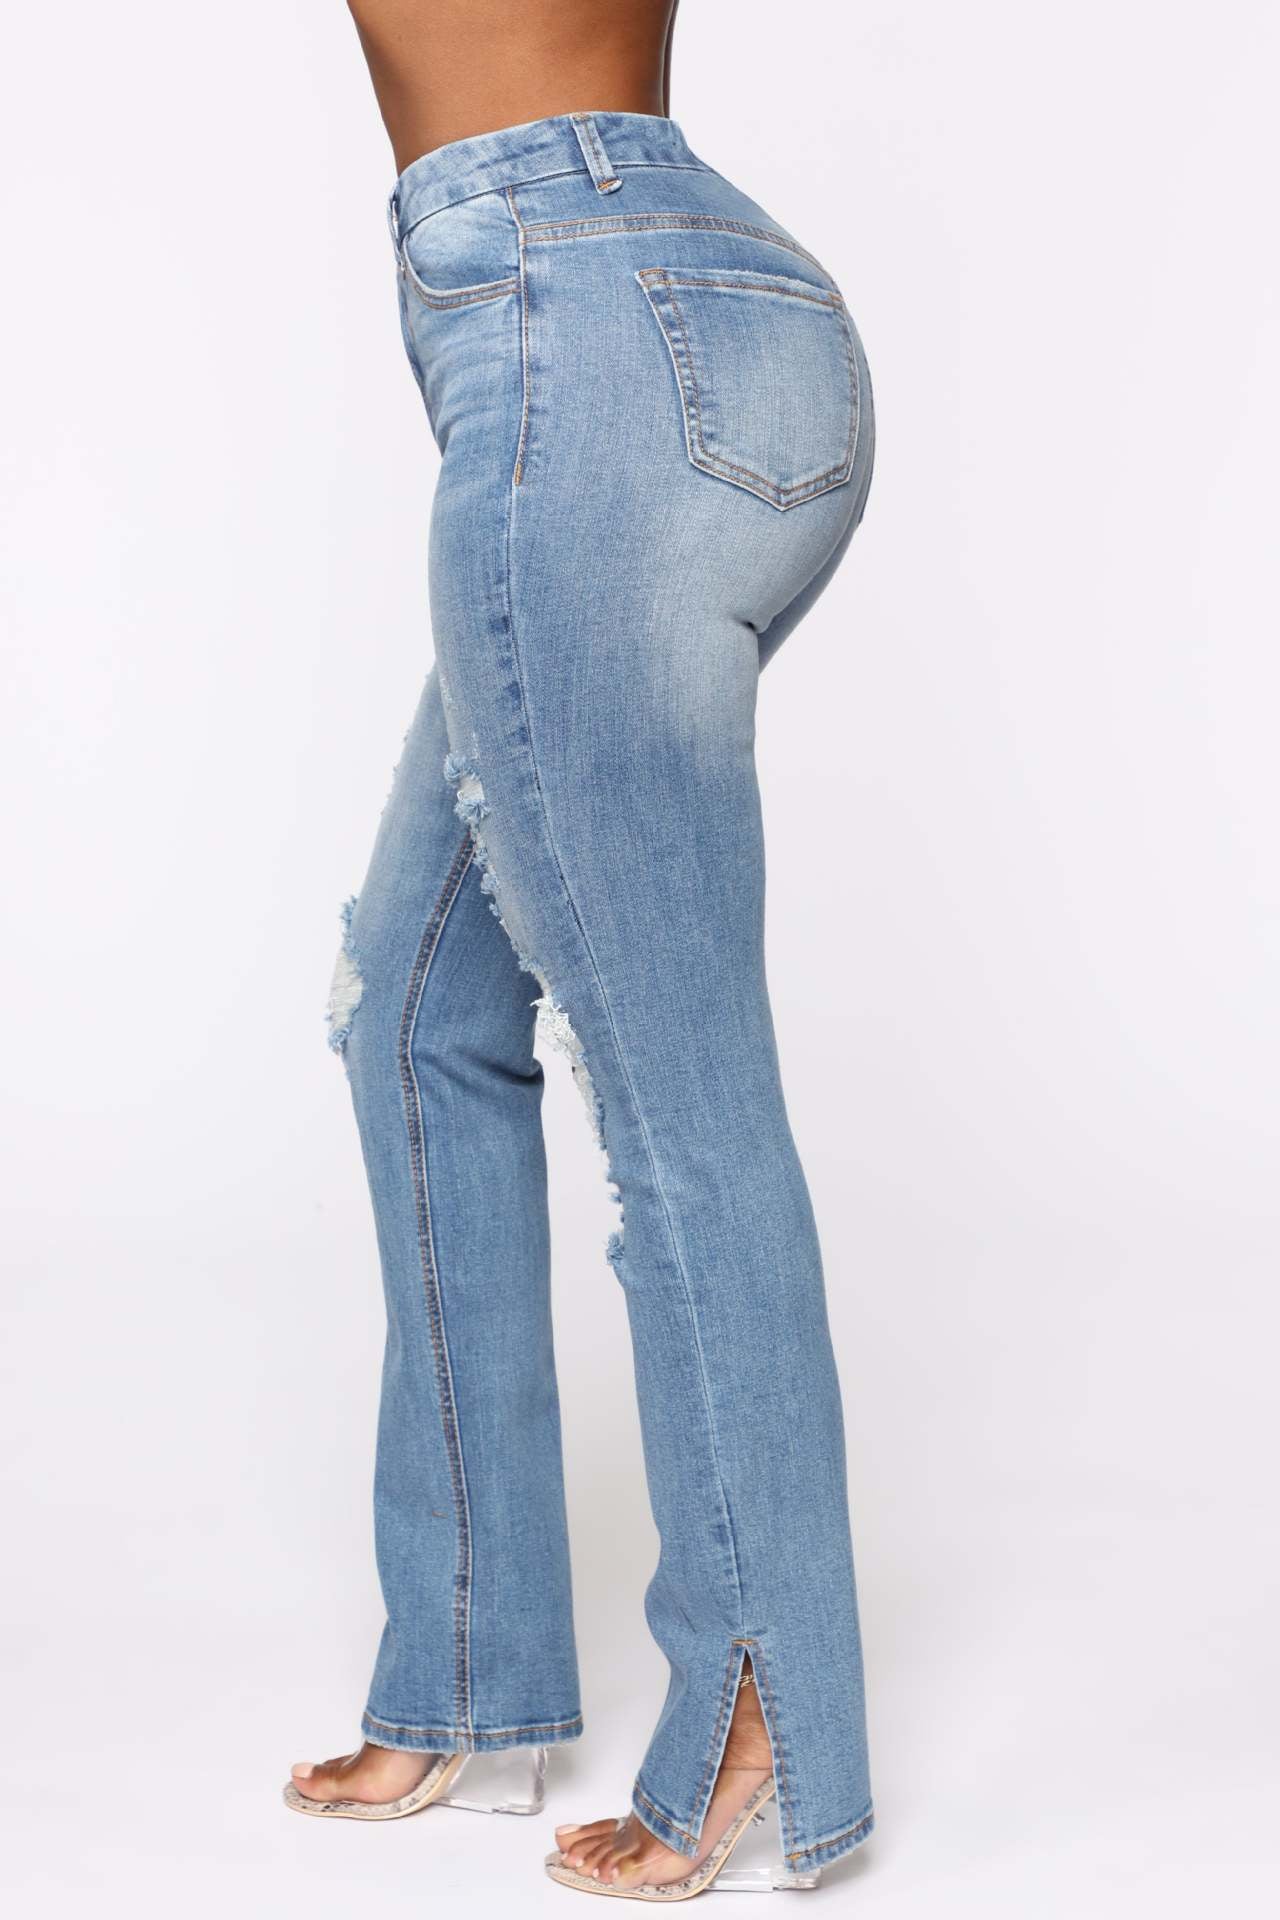 Split Jeans Women'S, Blue Water Washed Hole High Waist